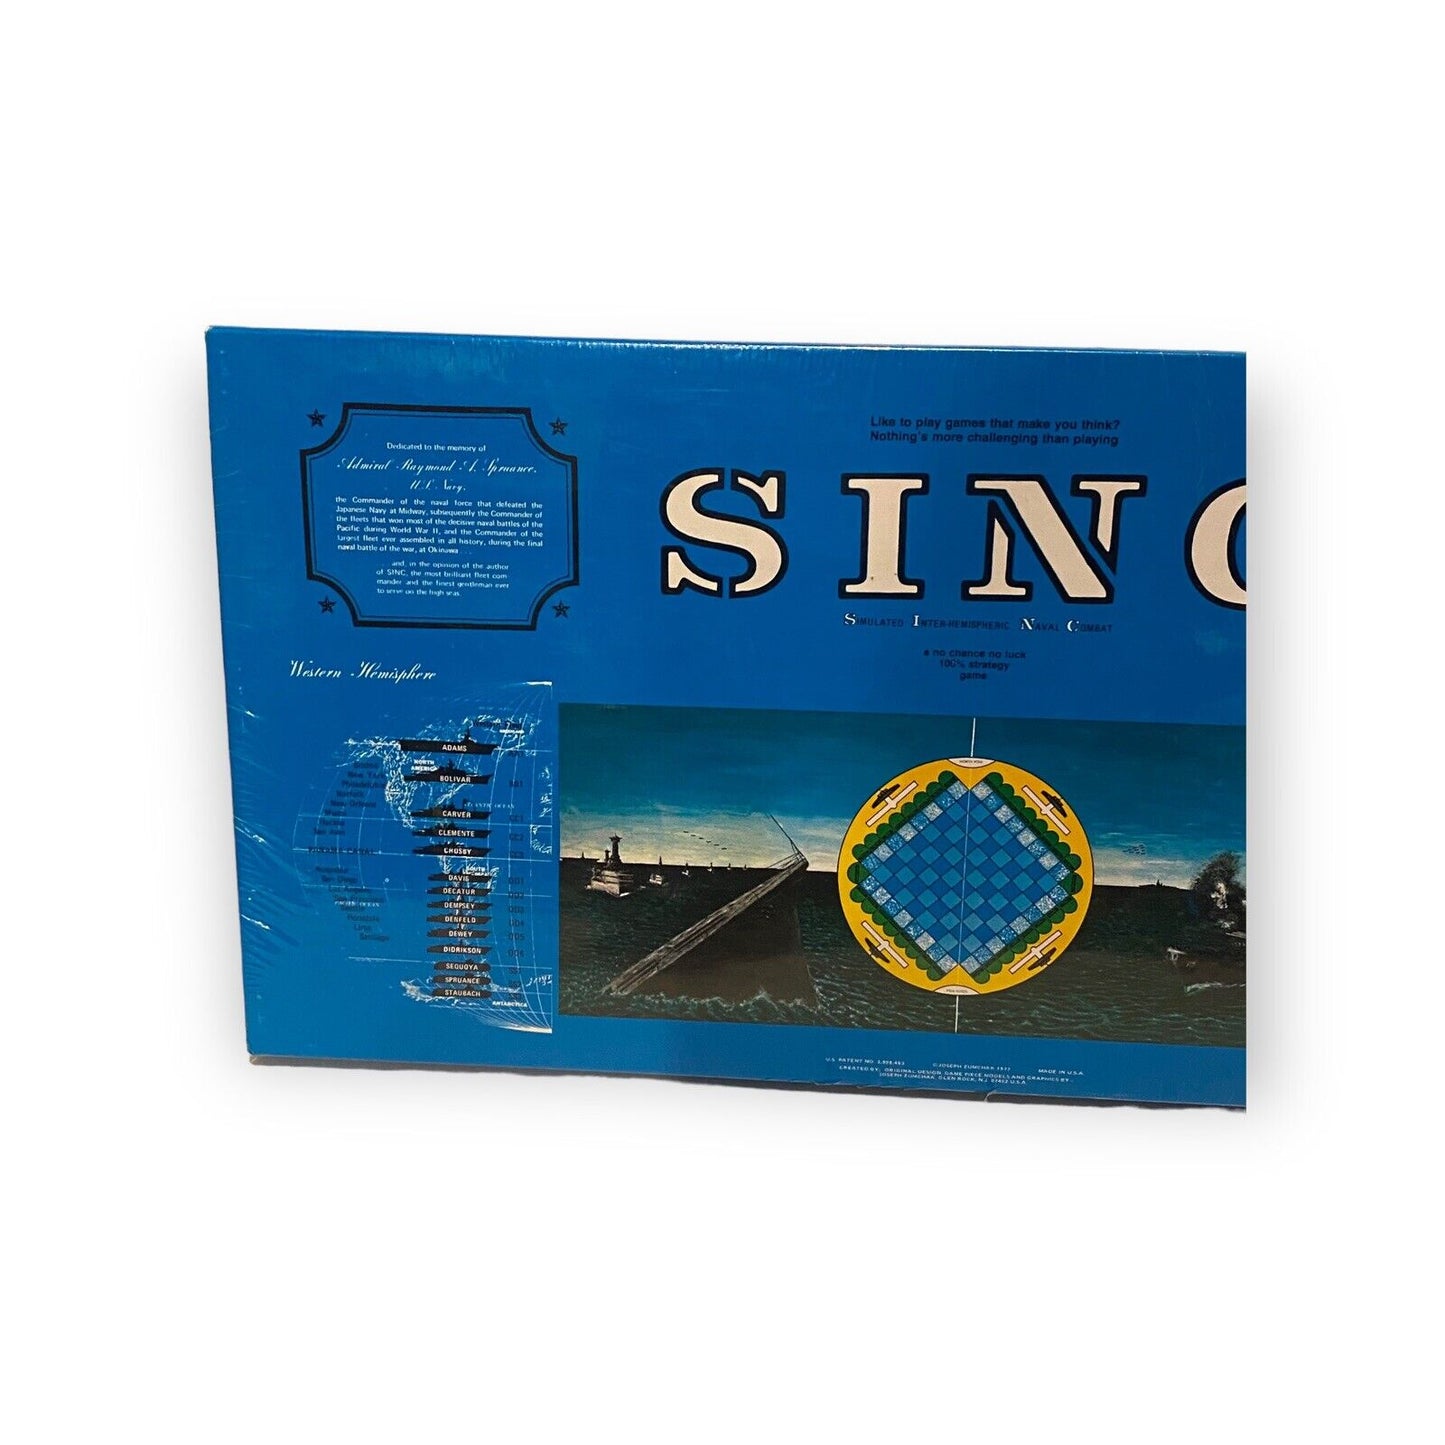 SINC Simulated Inter-Hemispheric Naval Combat Board Game 1977 VTG Rare Sealed